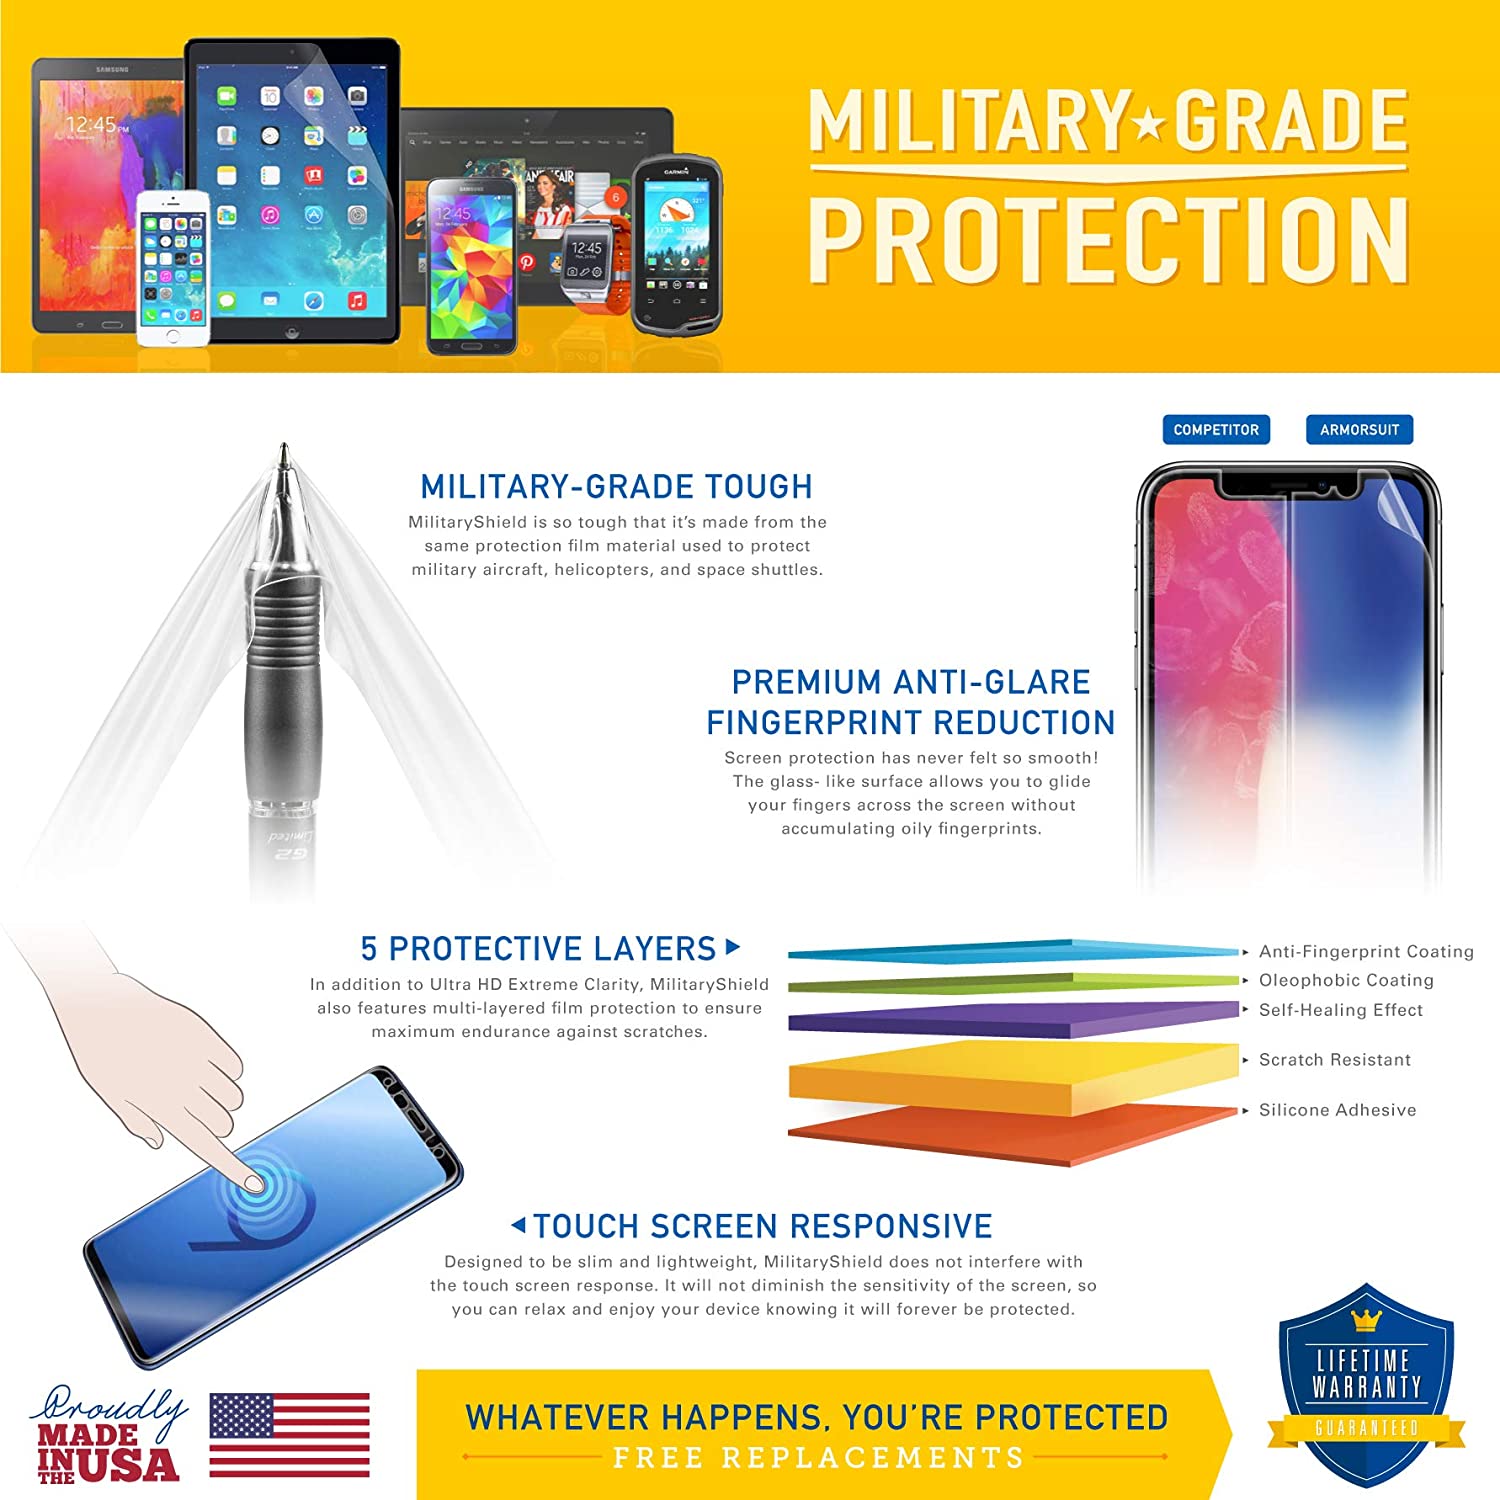 Samsung ATIV Smart PC Pro 700T Screen Protector + Black Carbon Fiber Film Protector